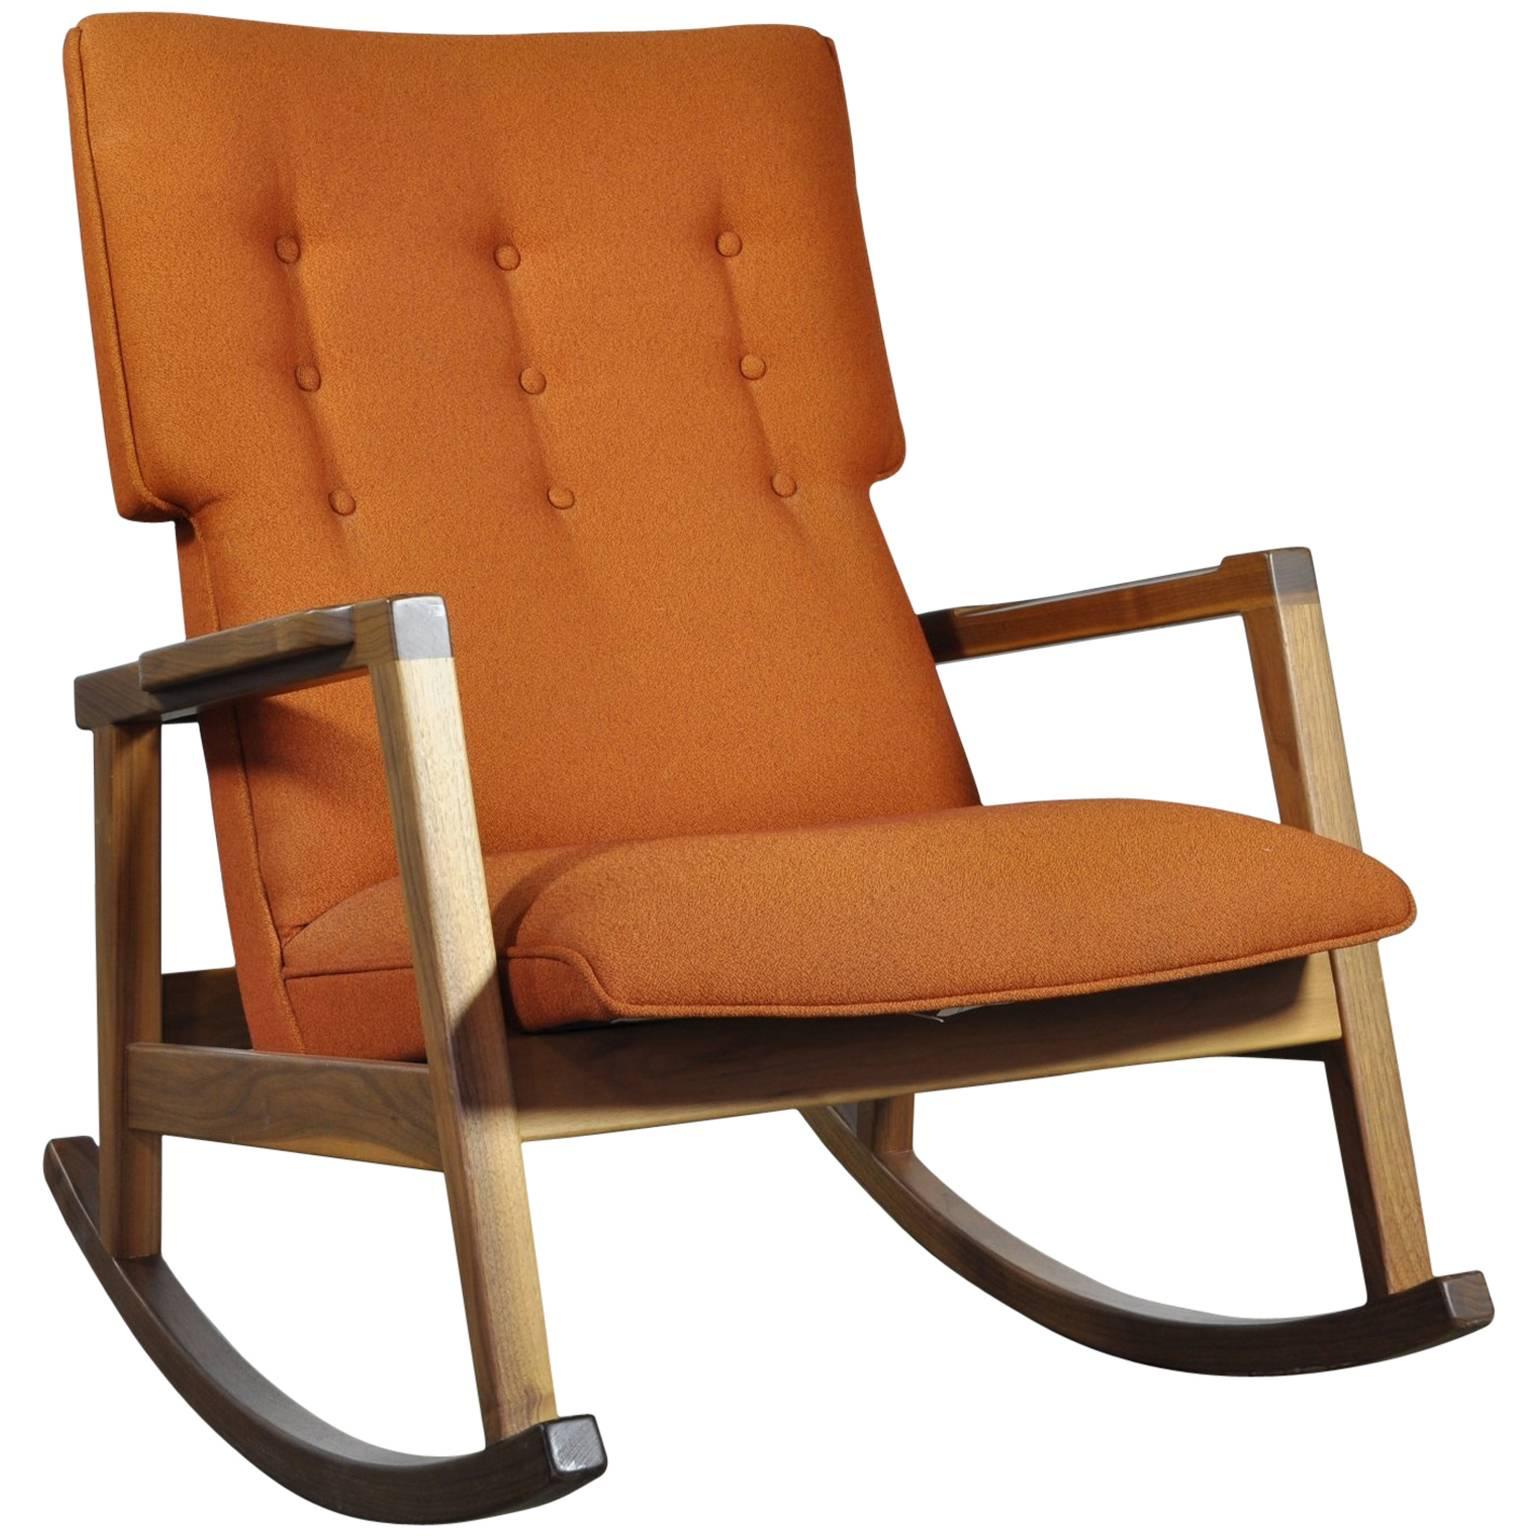 Walnut with Wool Fabric Jens Risom Rocker Chair for DWR